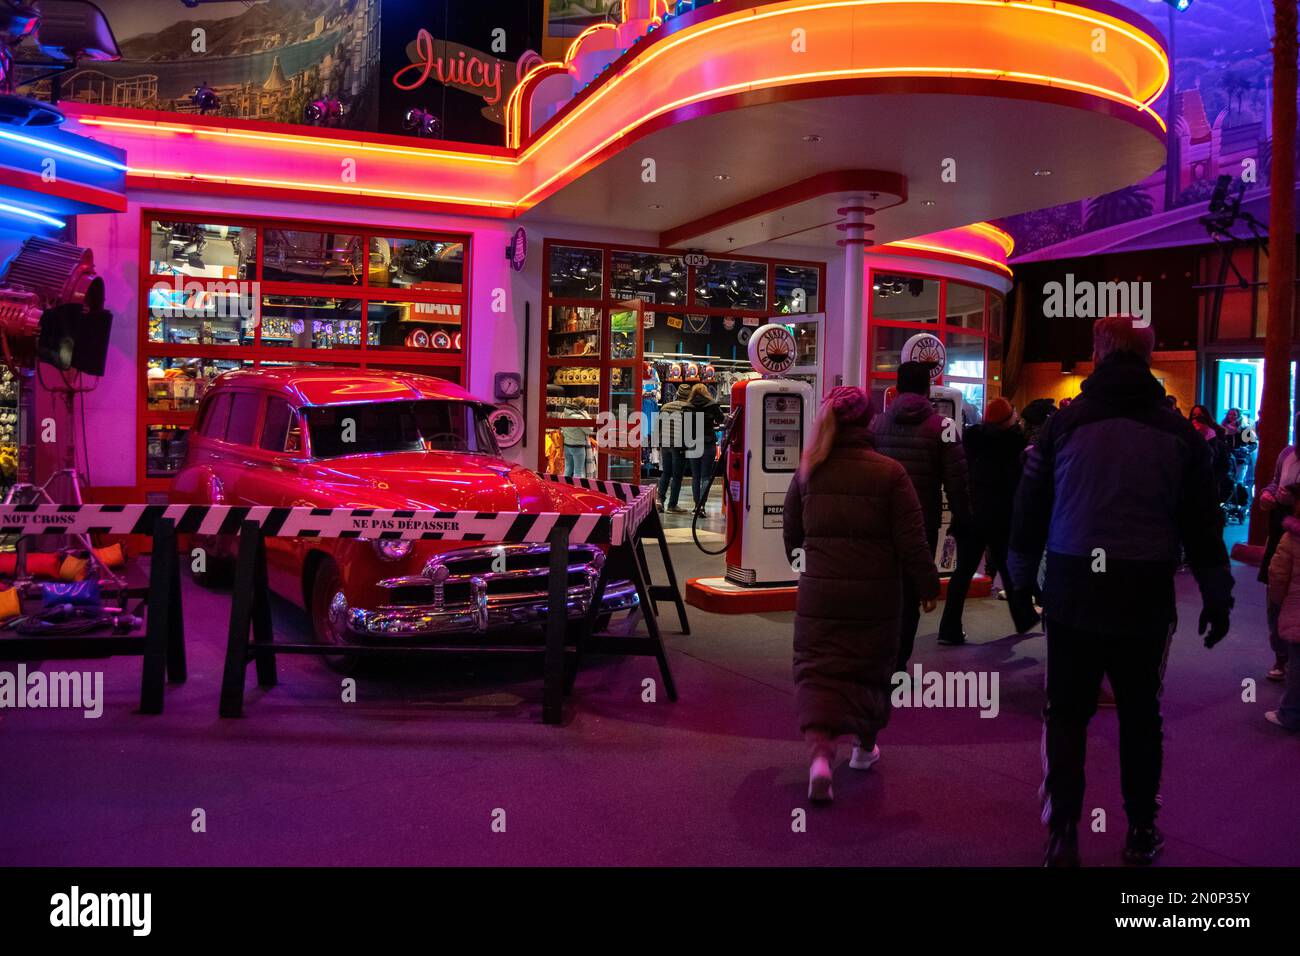 Disneyland Paris Walt Disney Studios, studio 1, fuel station scenery with neon lights. Stock Photo